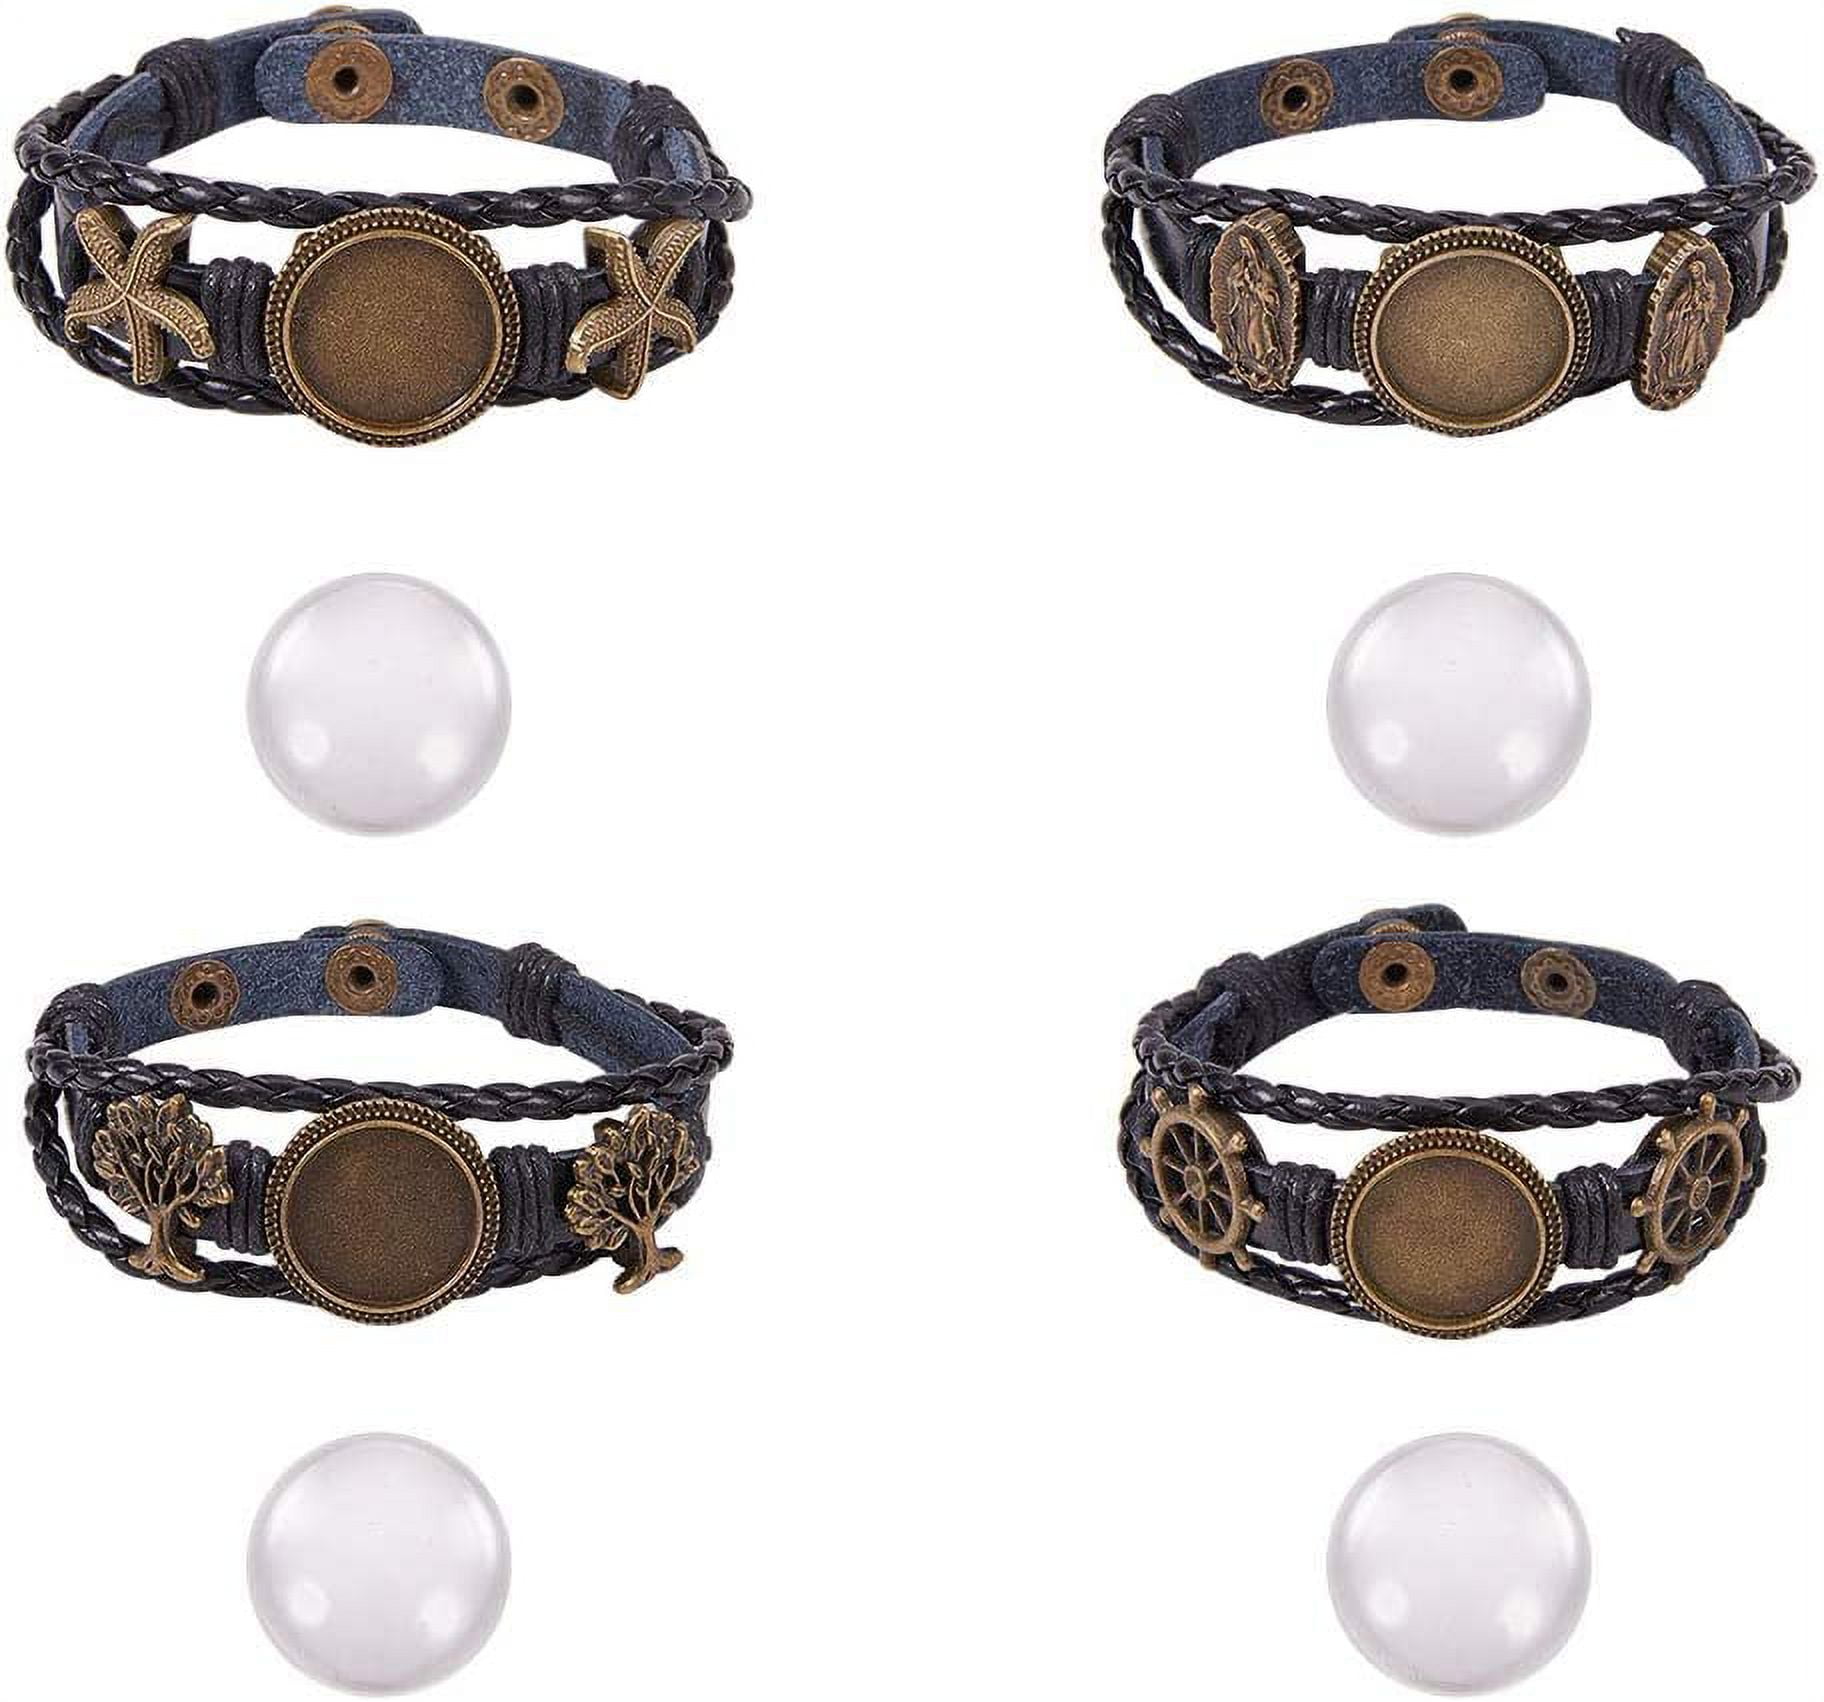 Wholesale SUNNYCLUE DIY 3 Sets Braided Leather Bracelet Making Kit